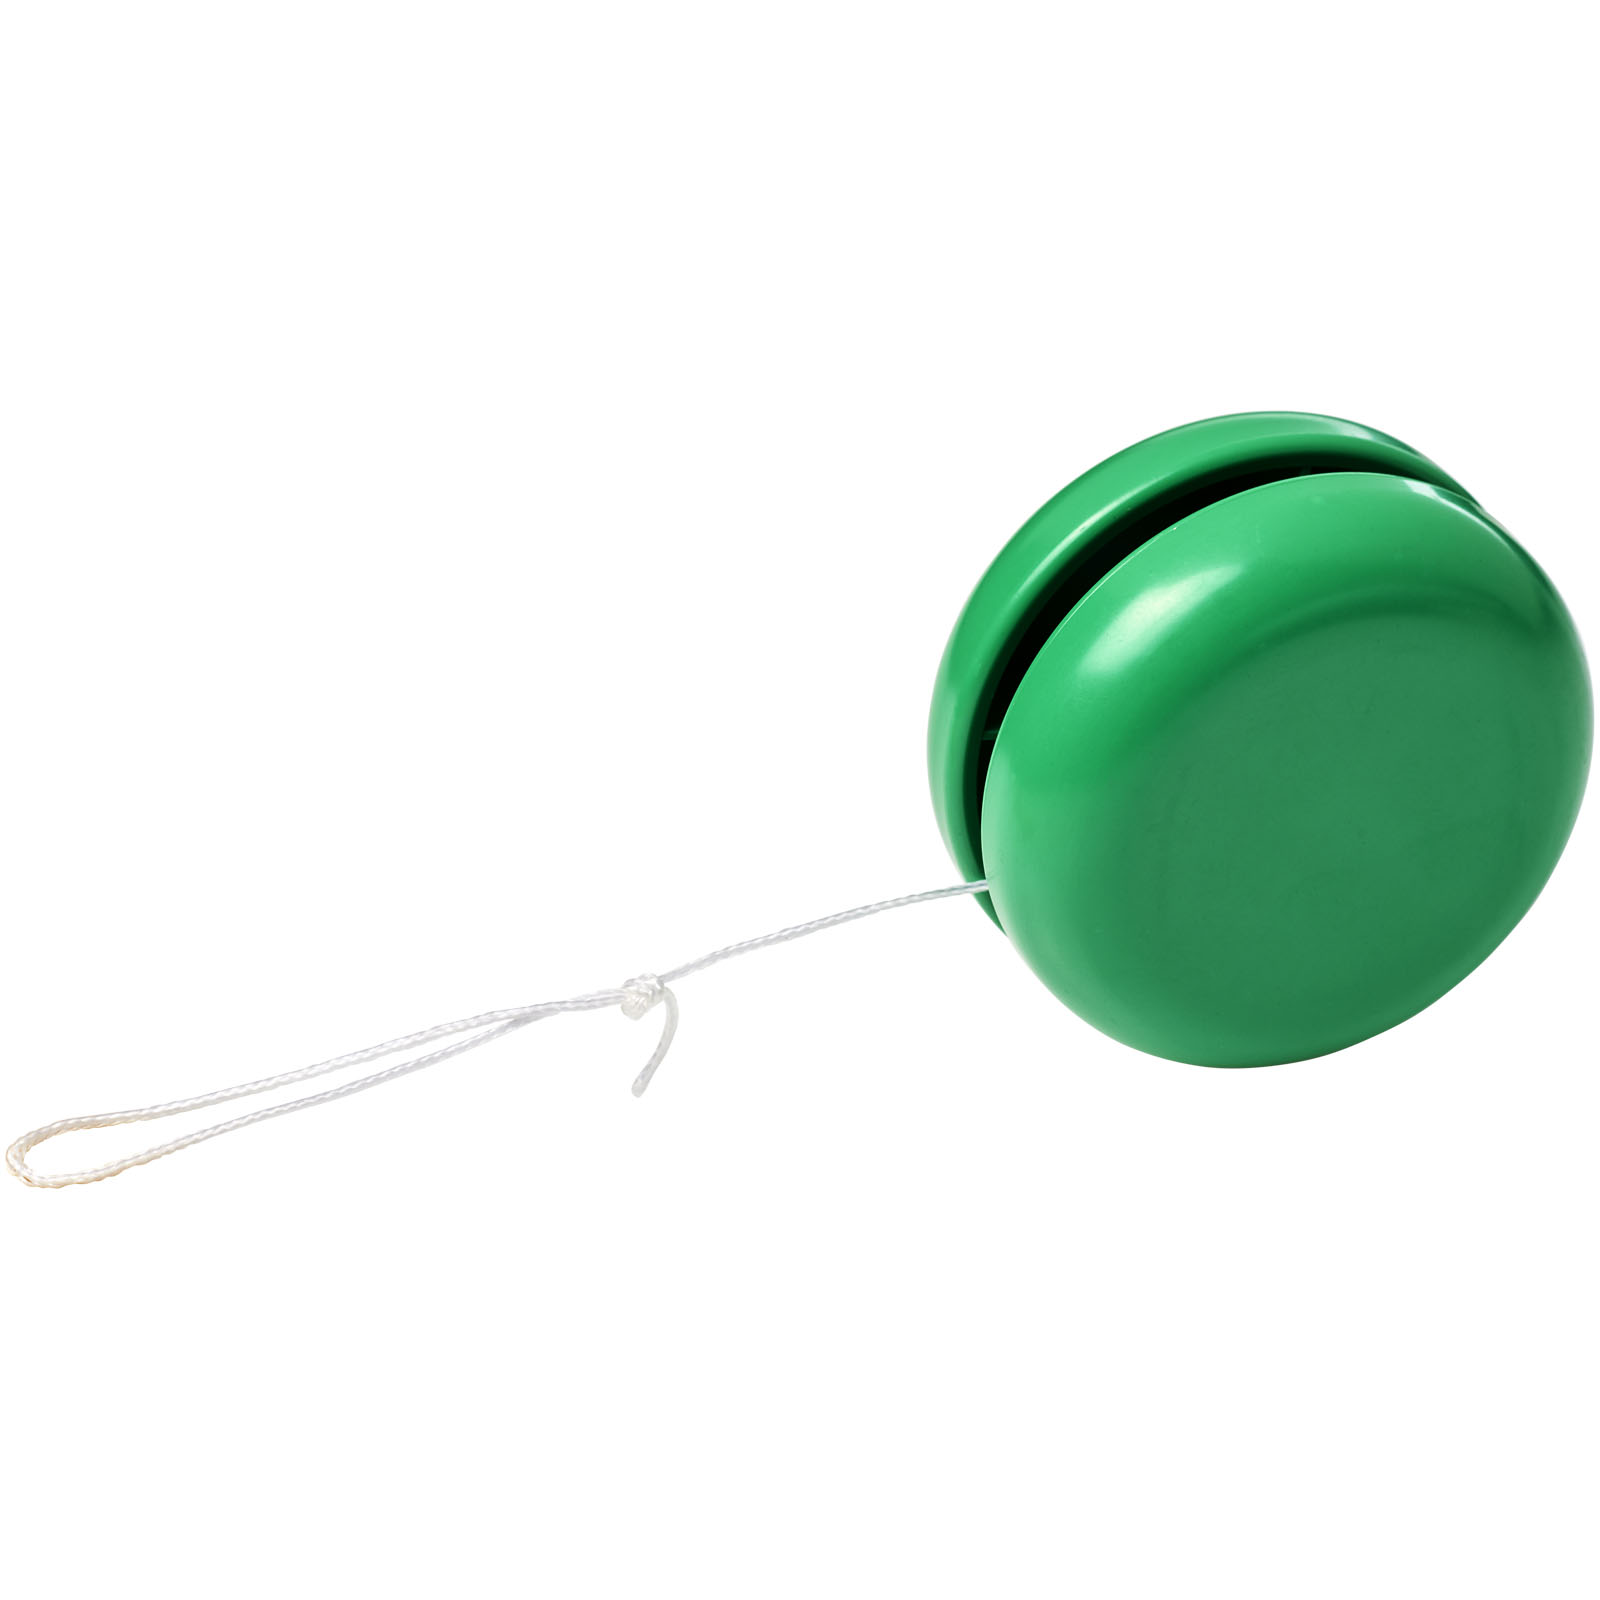 Advertising Indoor Games - Garo plastic yo-yo - 0